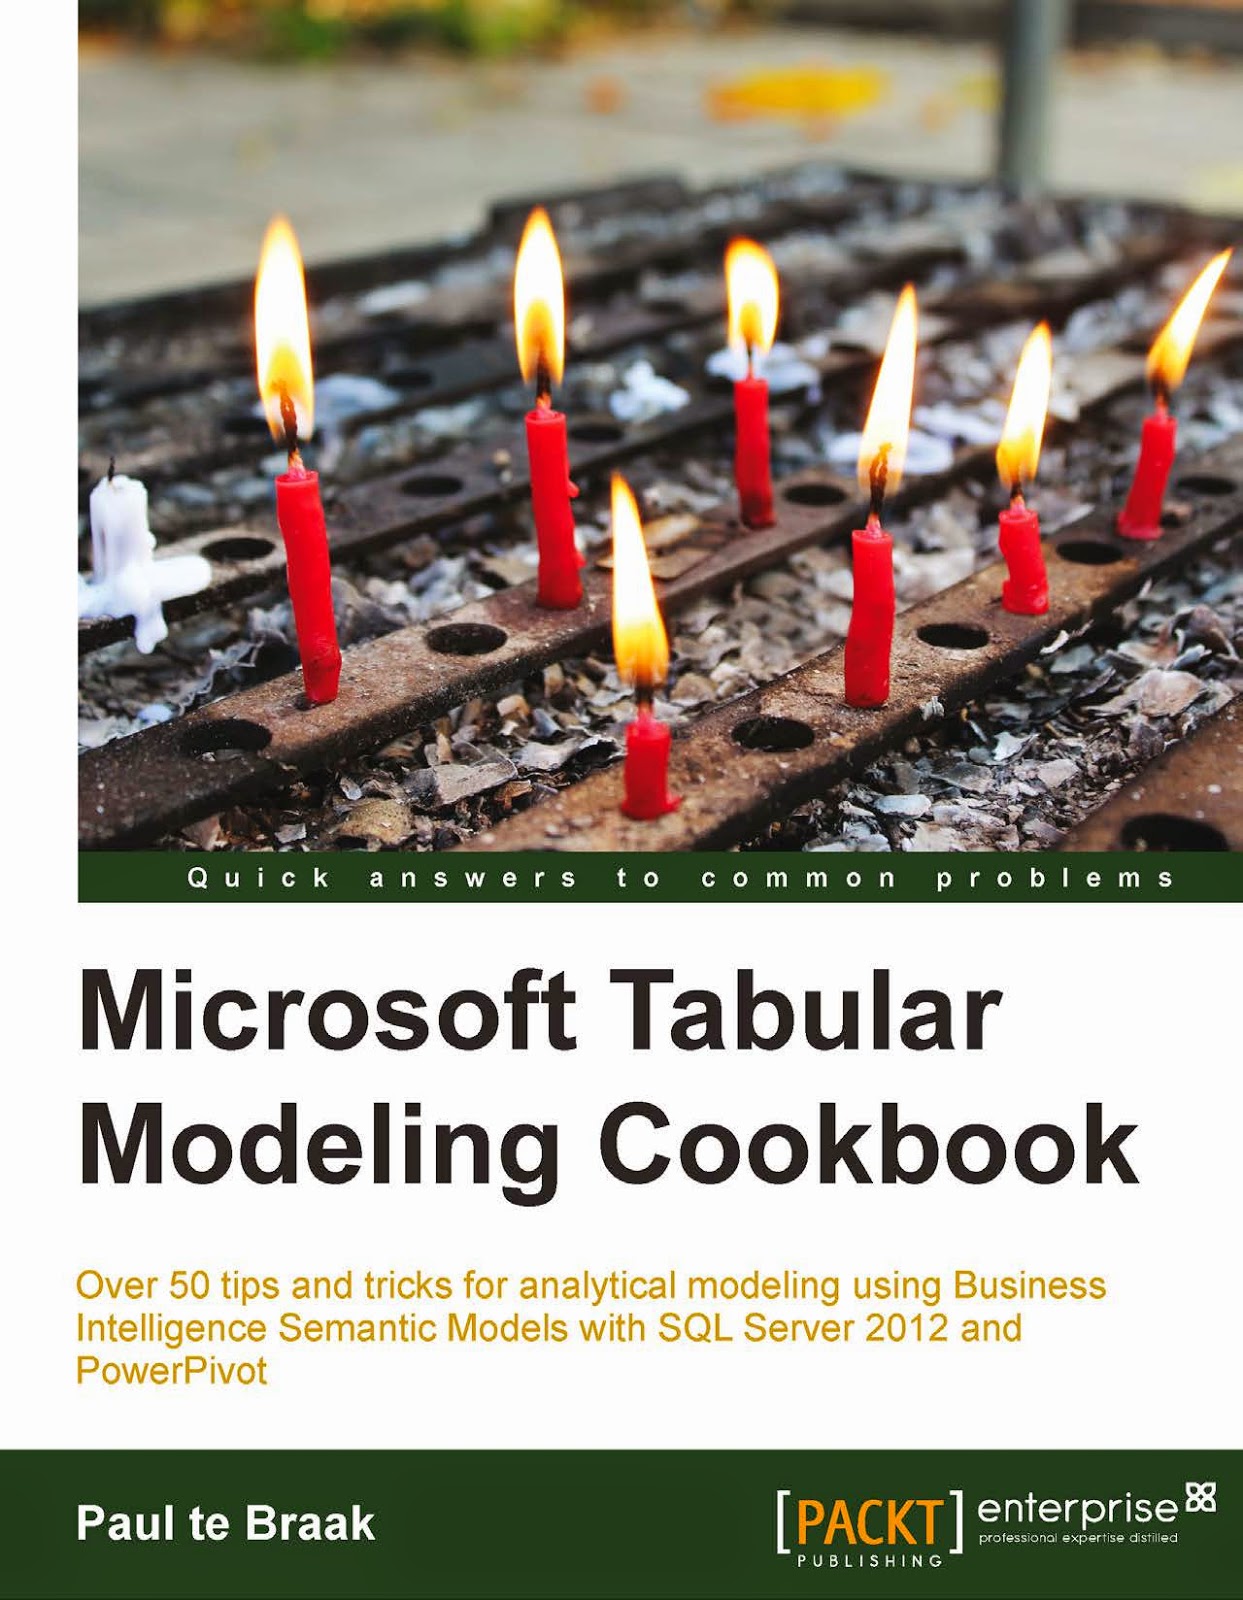 http://kingcheapebook.blogspot.com/2014/07/microsoft-tabular-modeling-cookbook.html